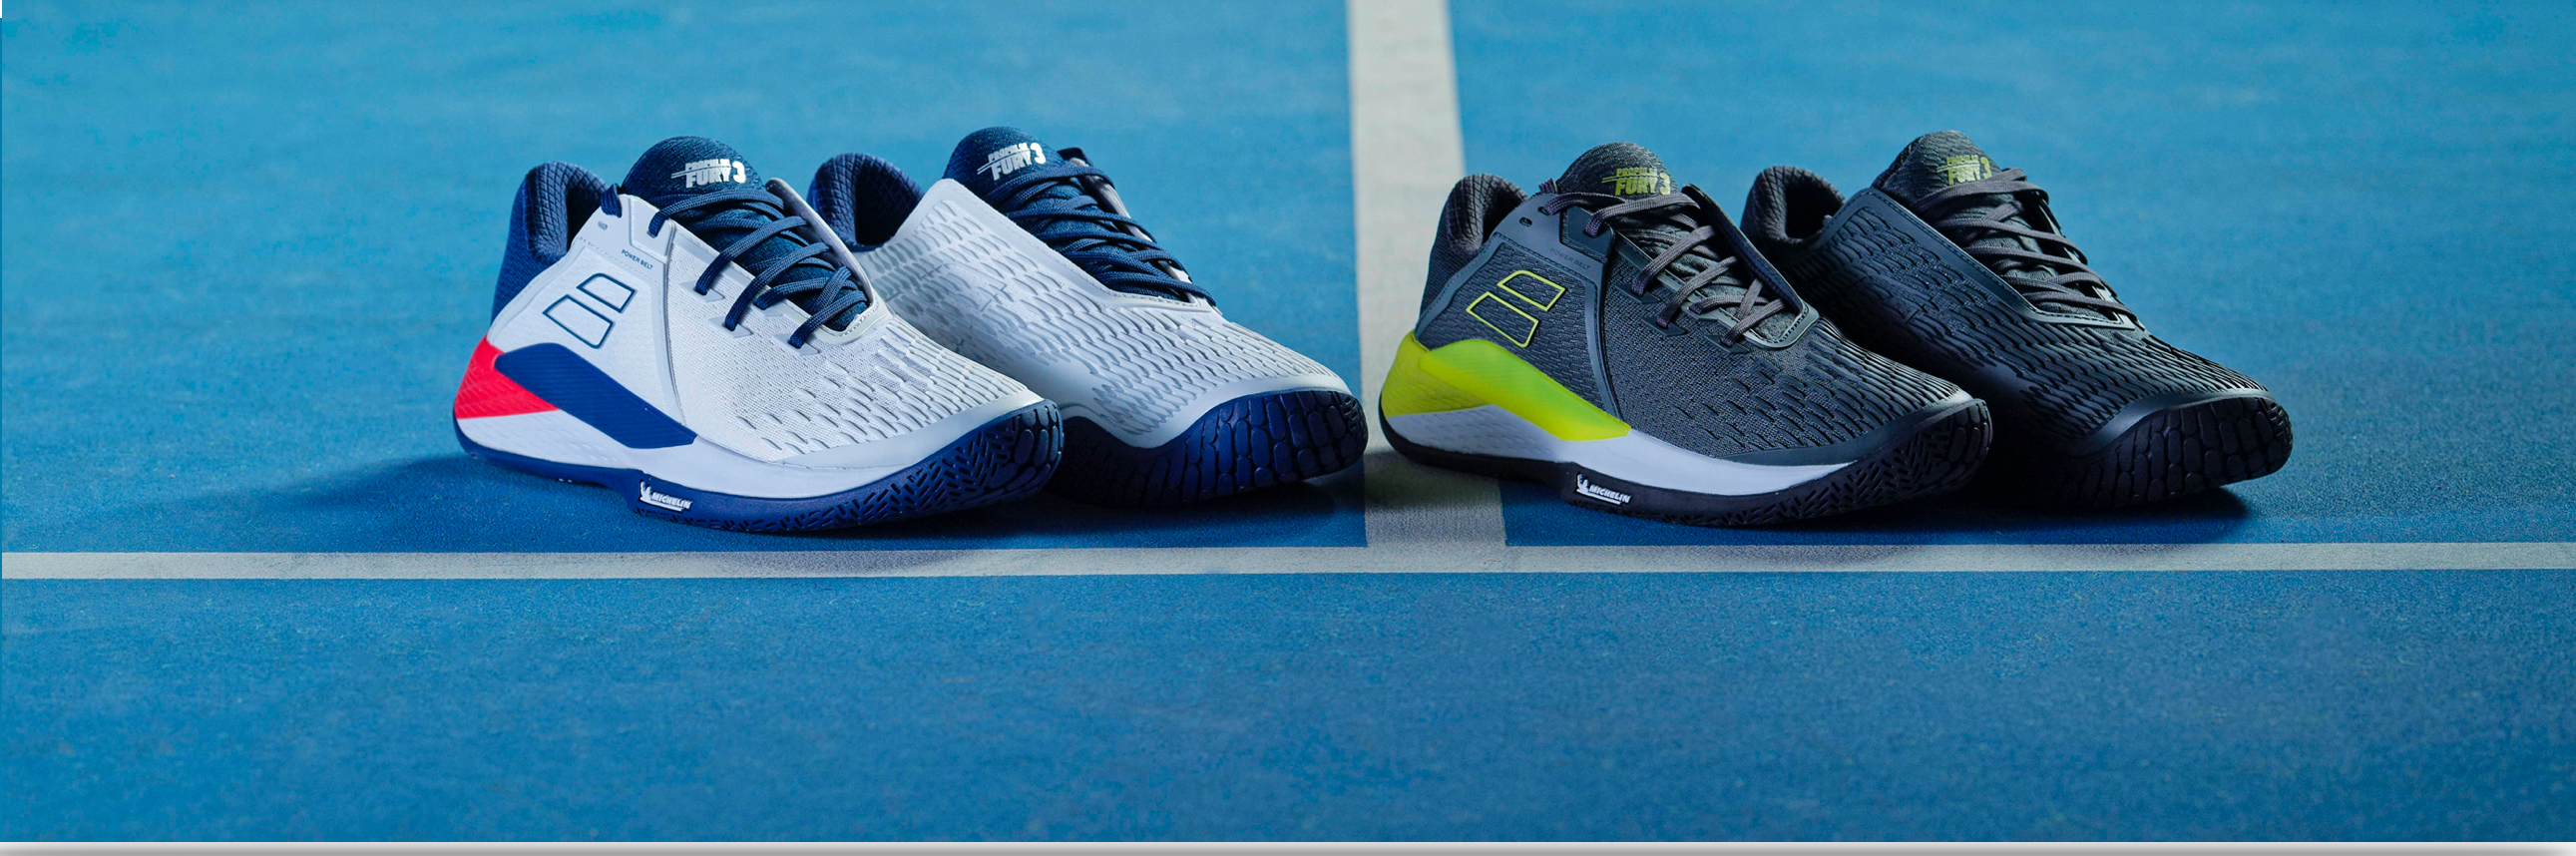 Racquet Point has the new Babolat Propulse Fury Men's Tennis Shoes